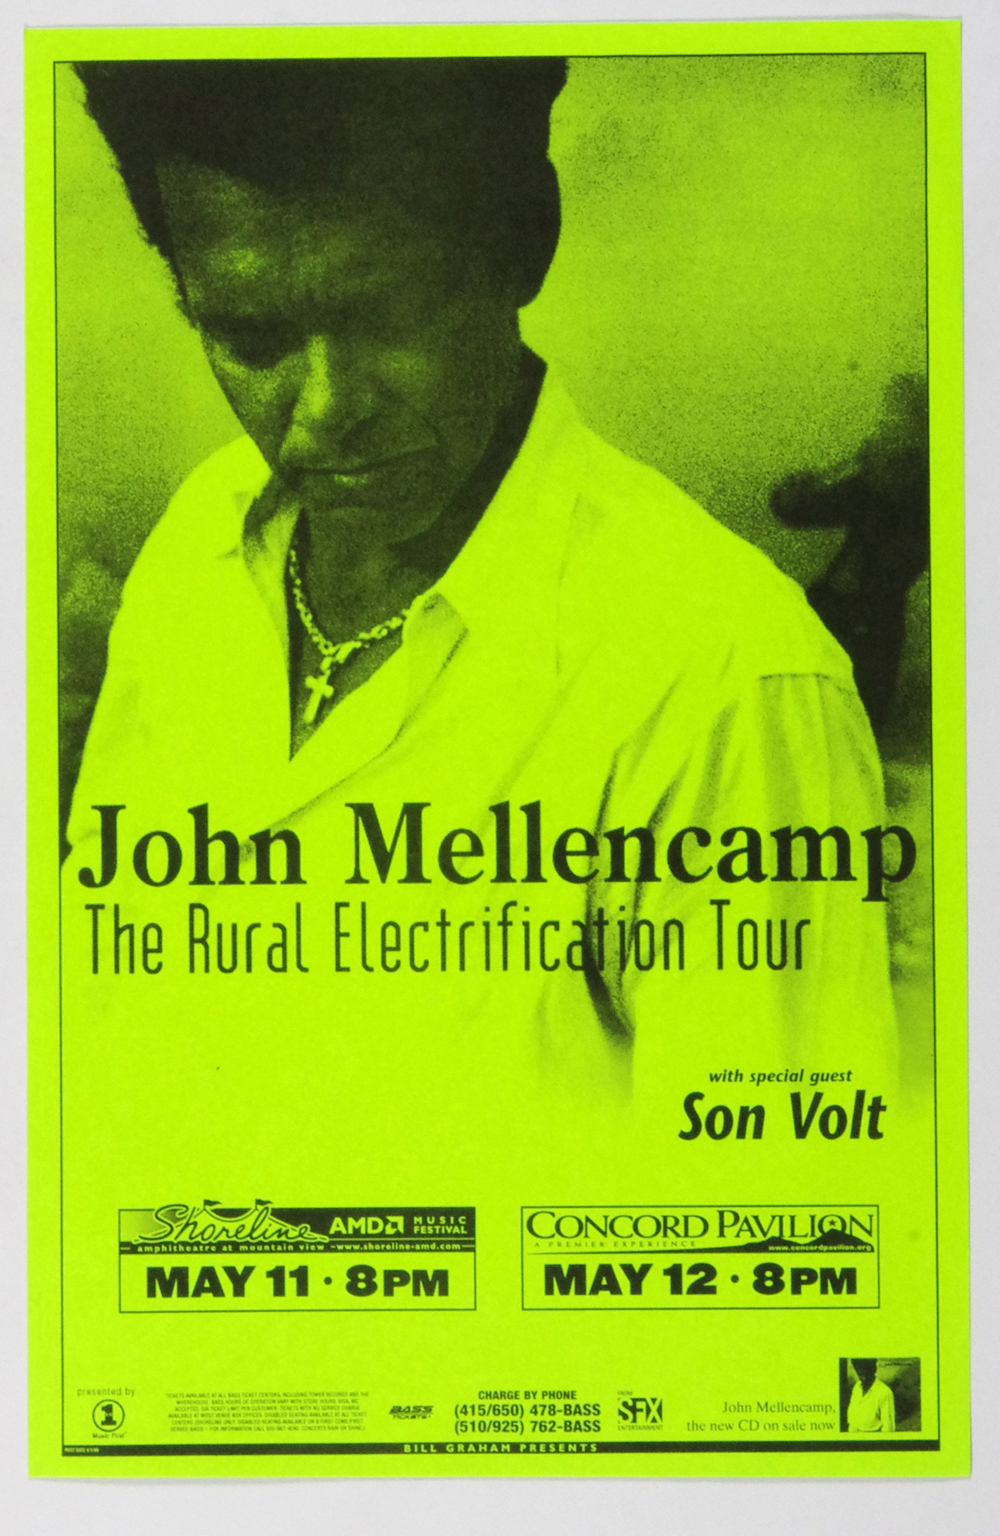 John Mellencamp Poster 1999 May 11 Shoreline Amphitheatre